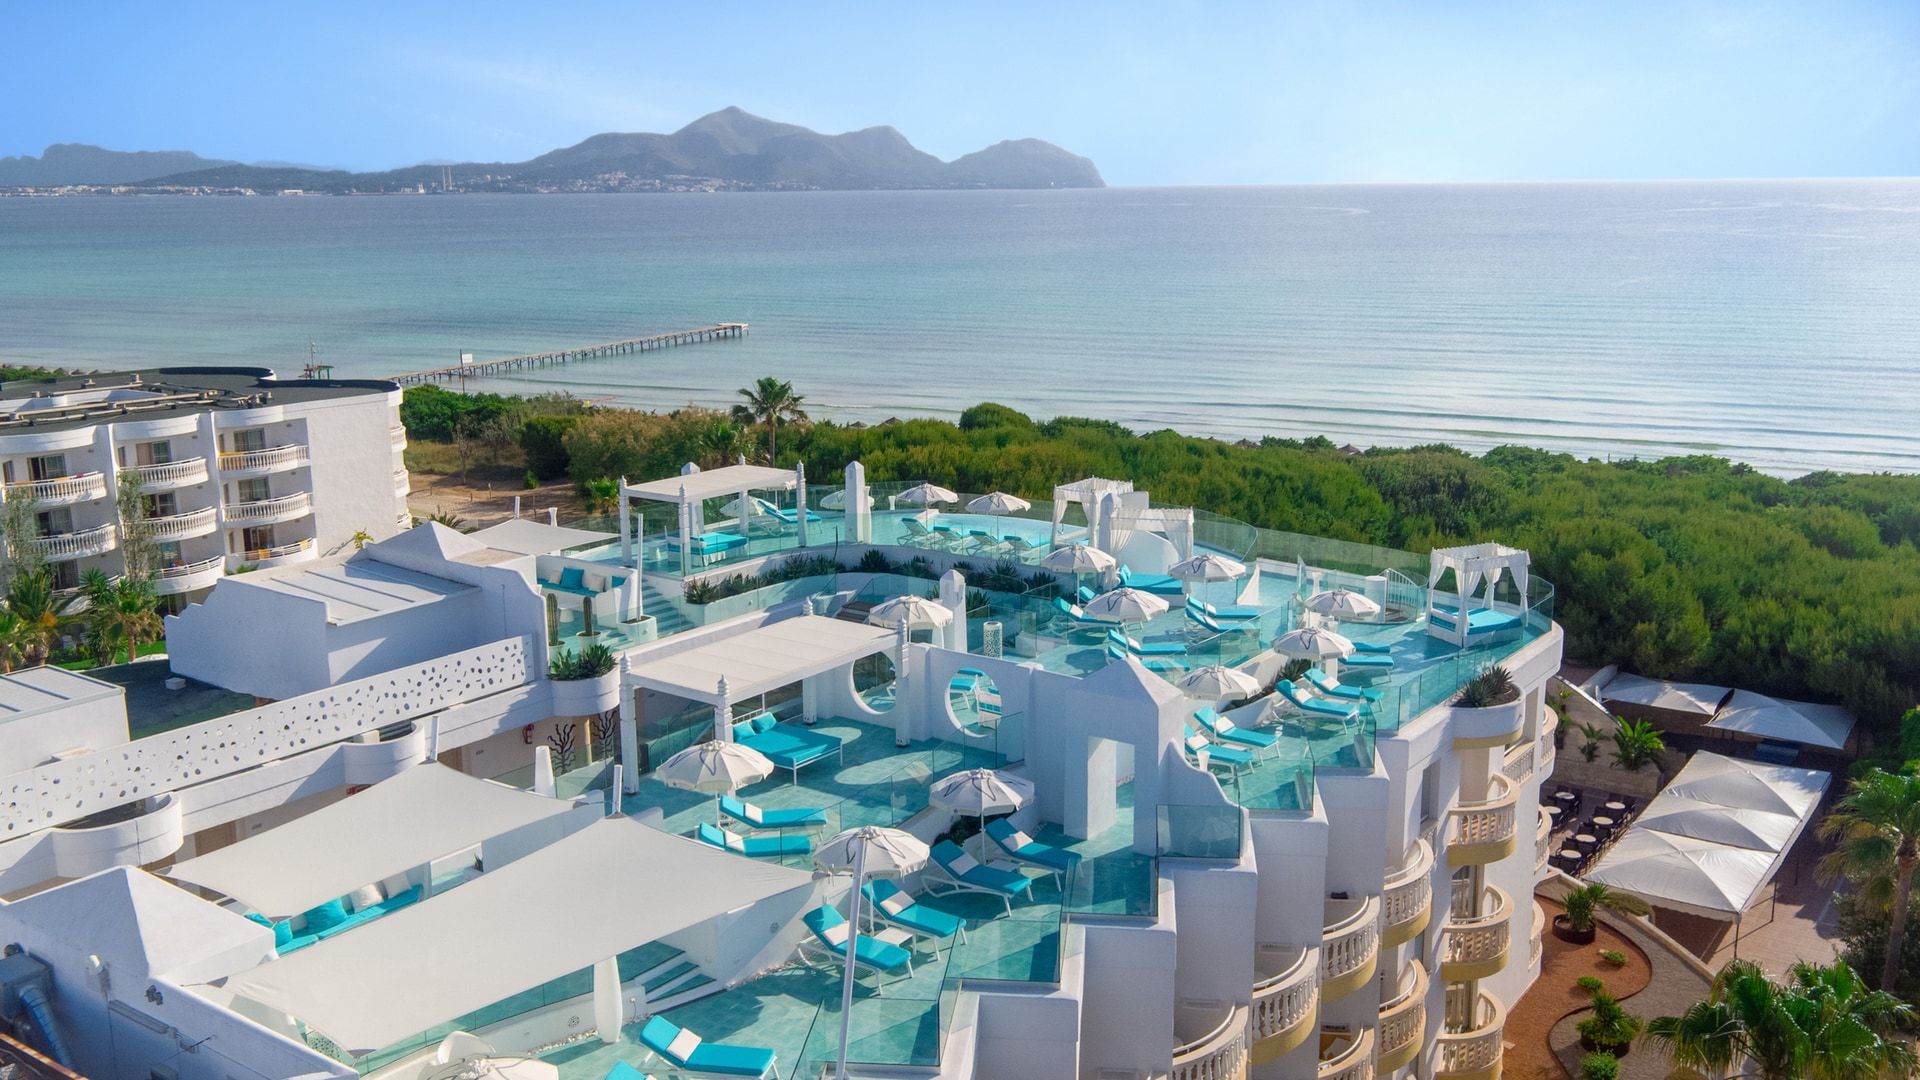 All Inclusive Hotel On The Beach In Majorca. Iberostar Albufera Playa